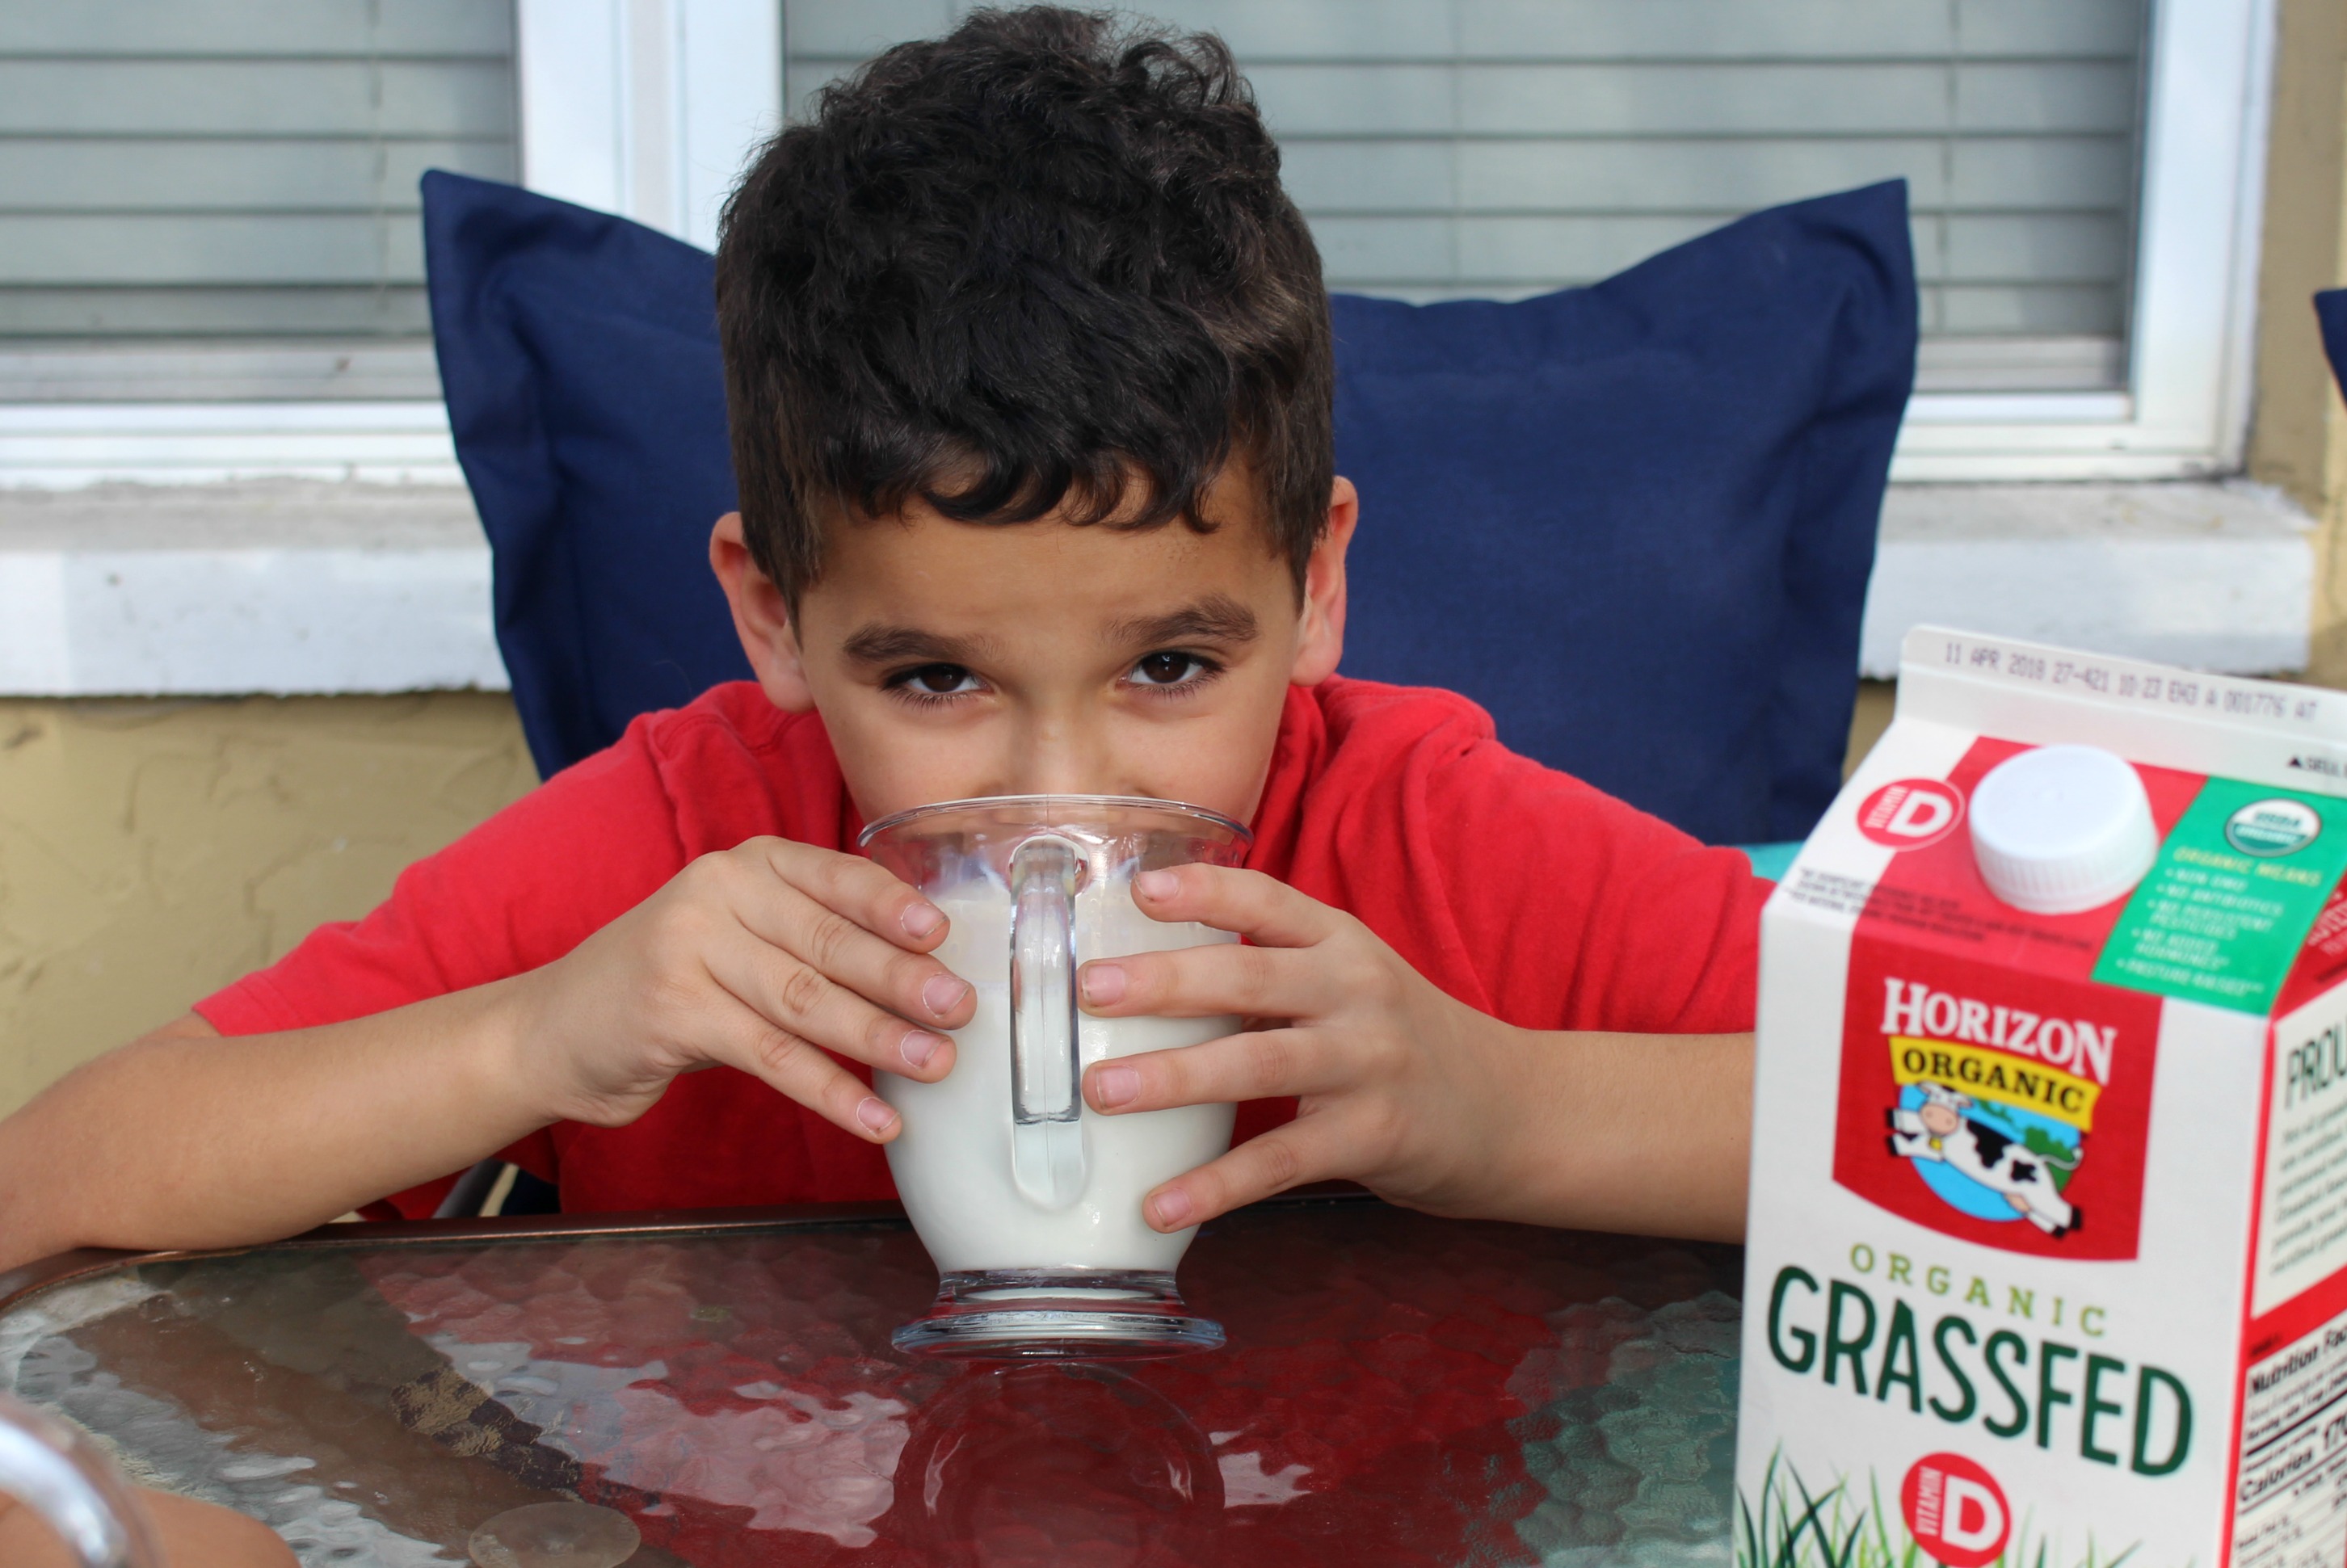 Organic-grassfed-horizon-milk-walmart-best-milk, stress-free-kids